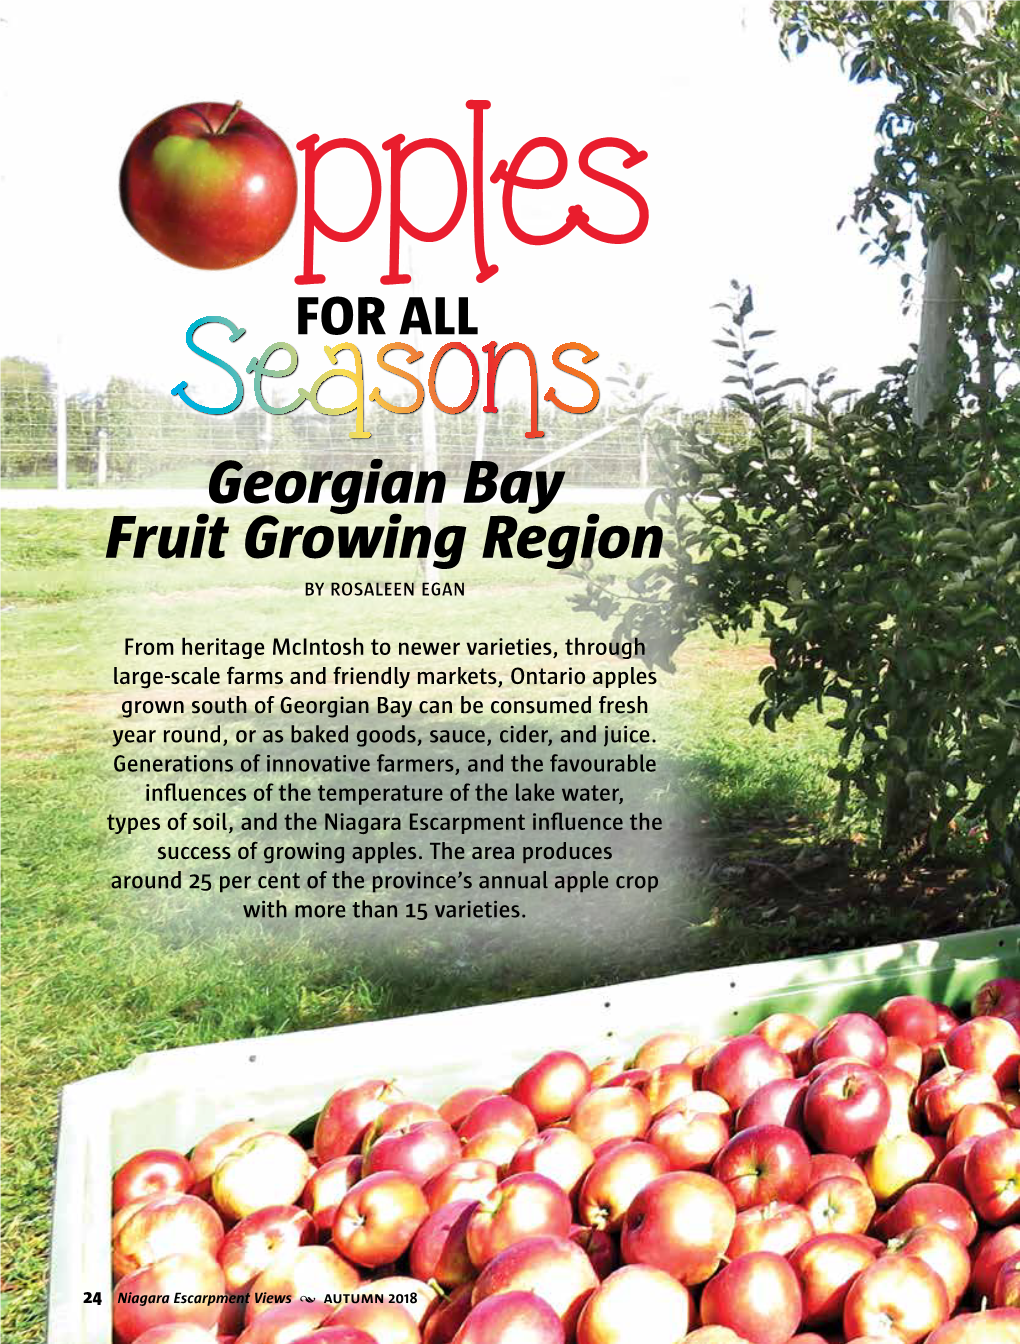 Georgian Bay Fruit Growing Region by ROSALEEN EGAN